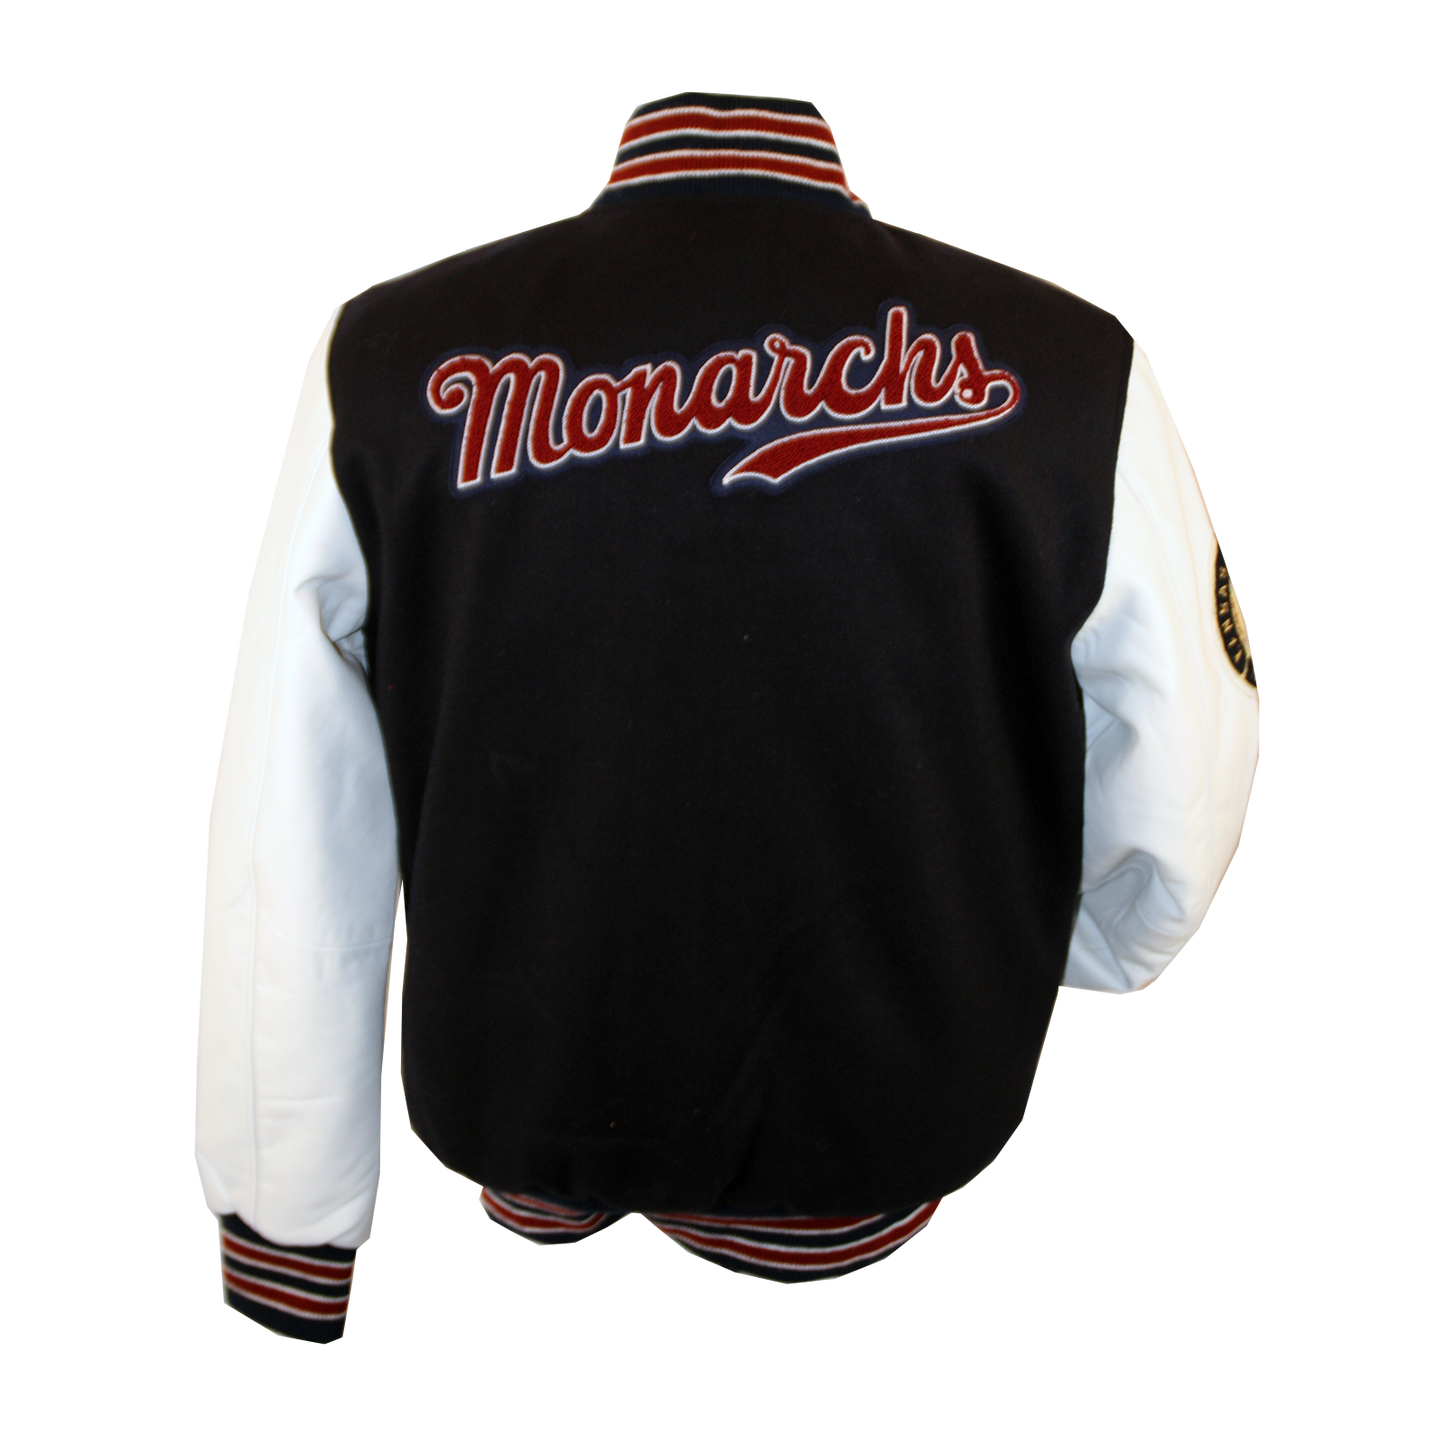 Monarchs Letterman Jacket